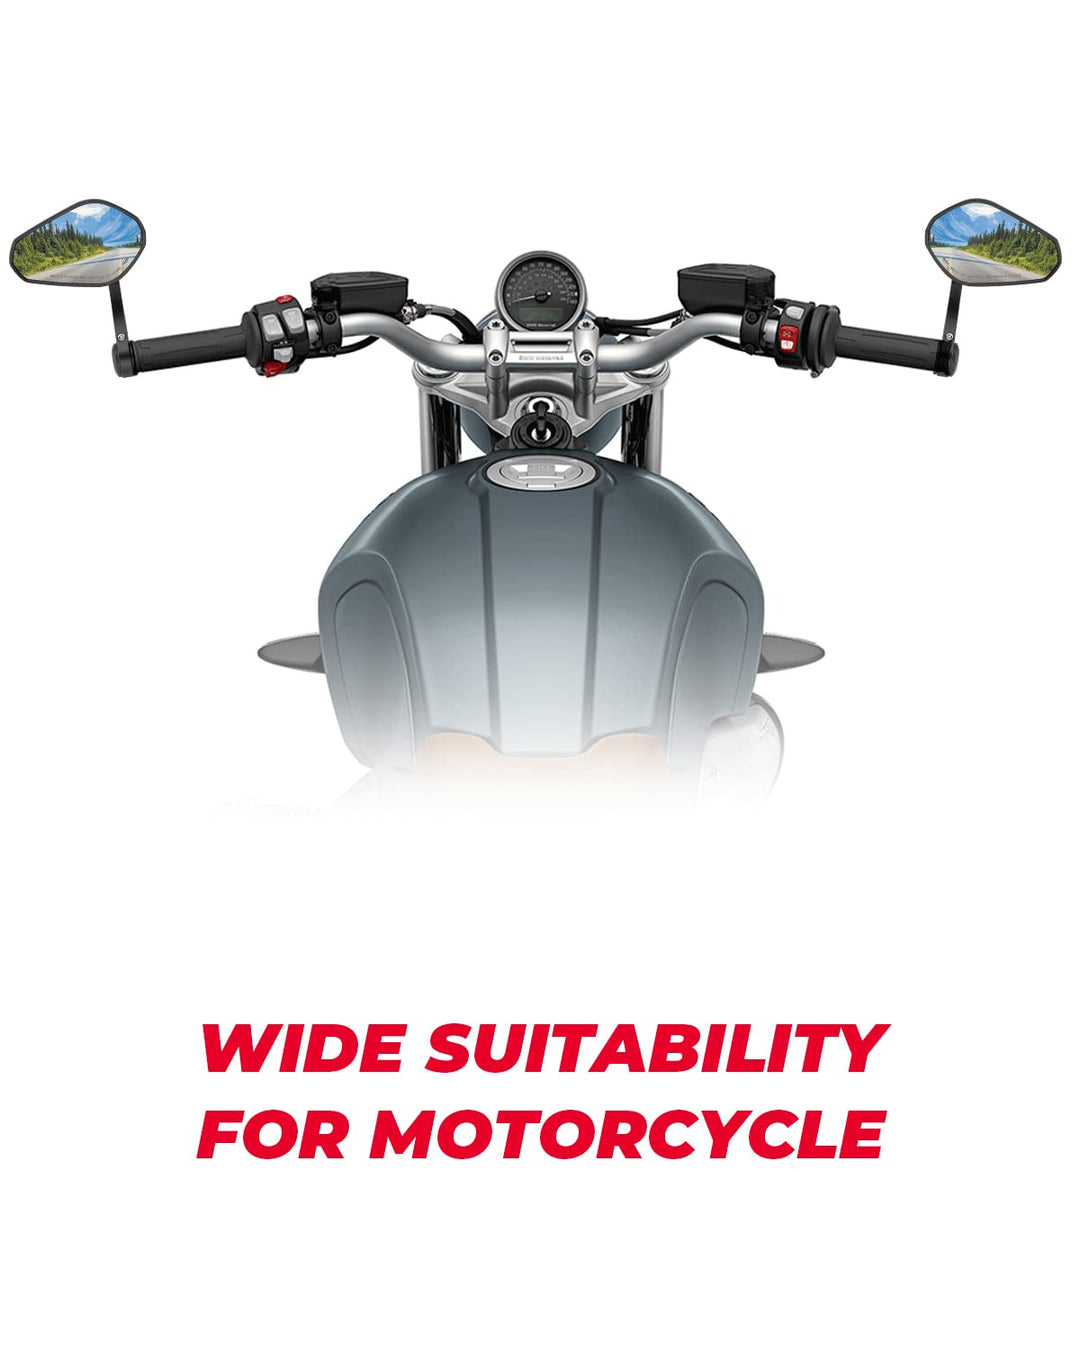 Motorcycle 360 Degrees Ball-Type Adjustment Handlebar Mirrors - Kemimoto